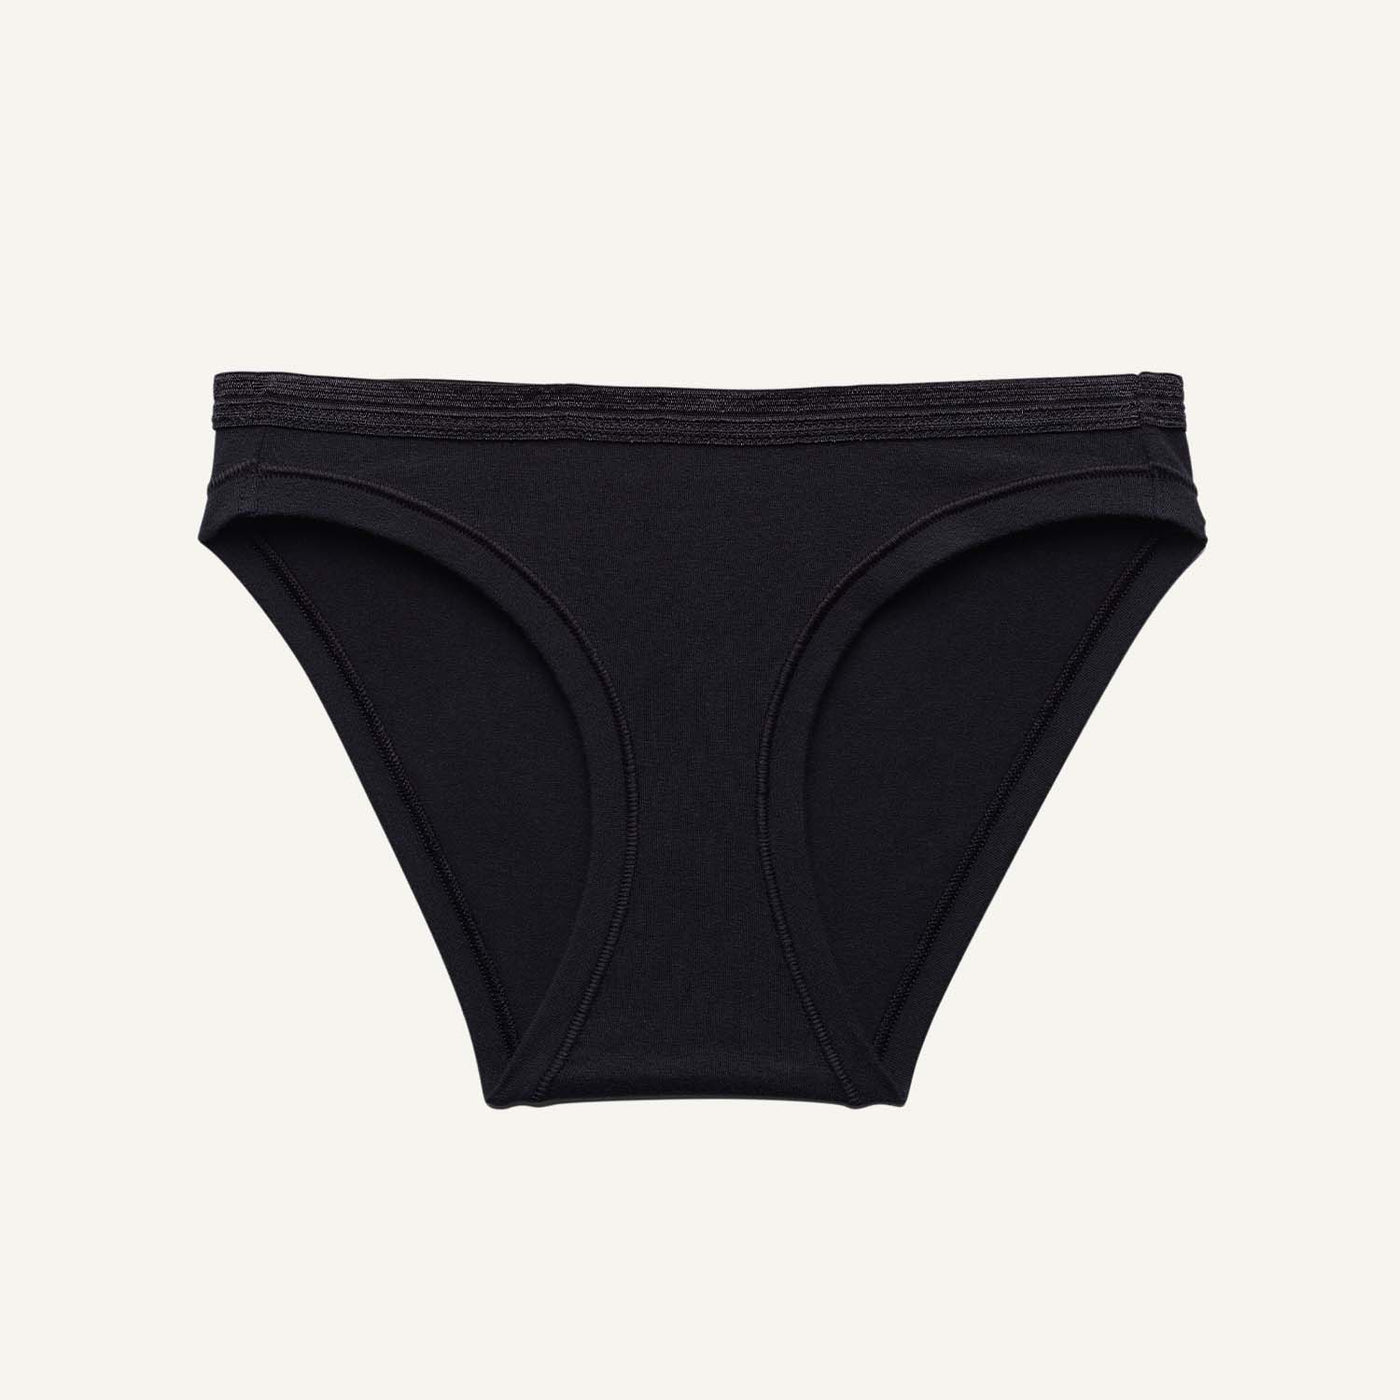 SAYFUT Women's Itsy Back Ruched Cheeky Thong Bikini Bottoms Underwear  Stretch Panty 2 Pack